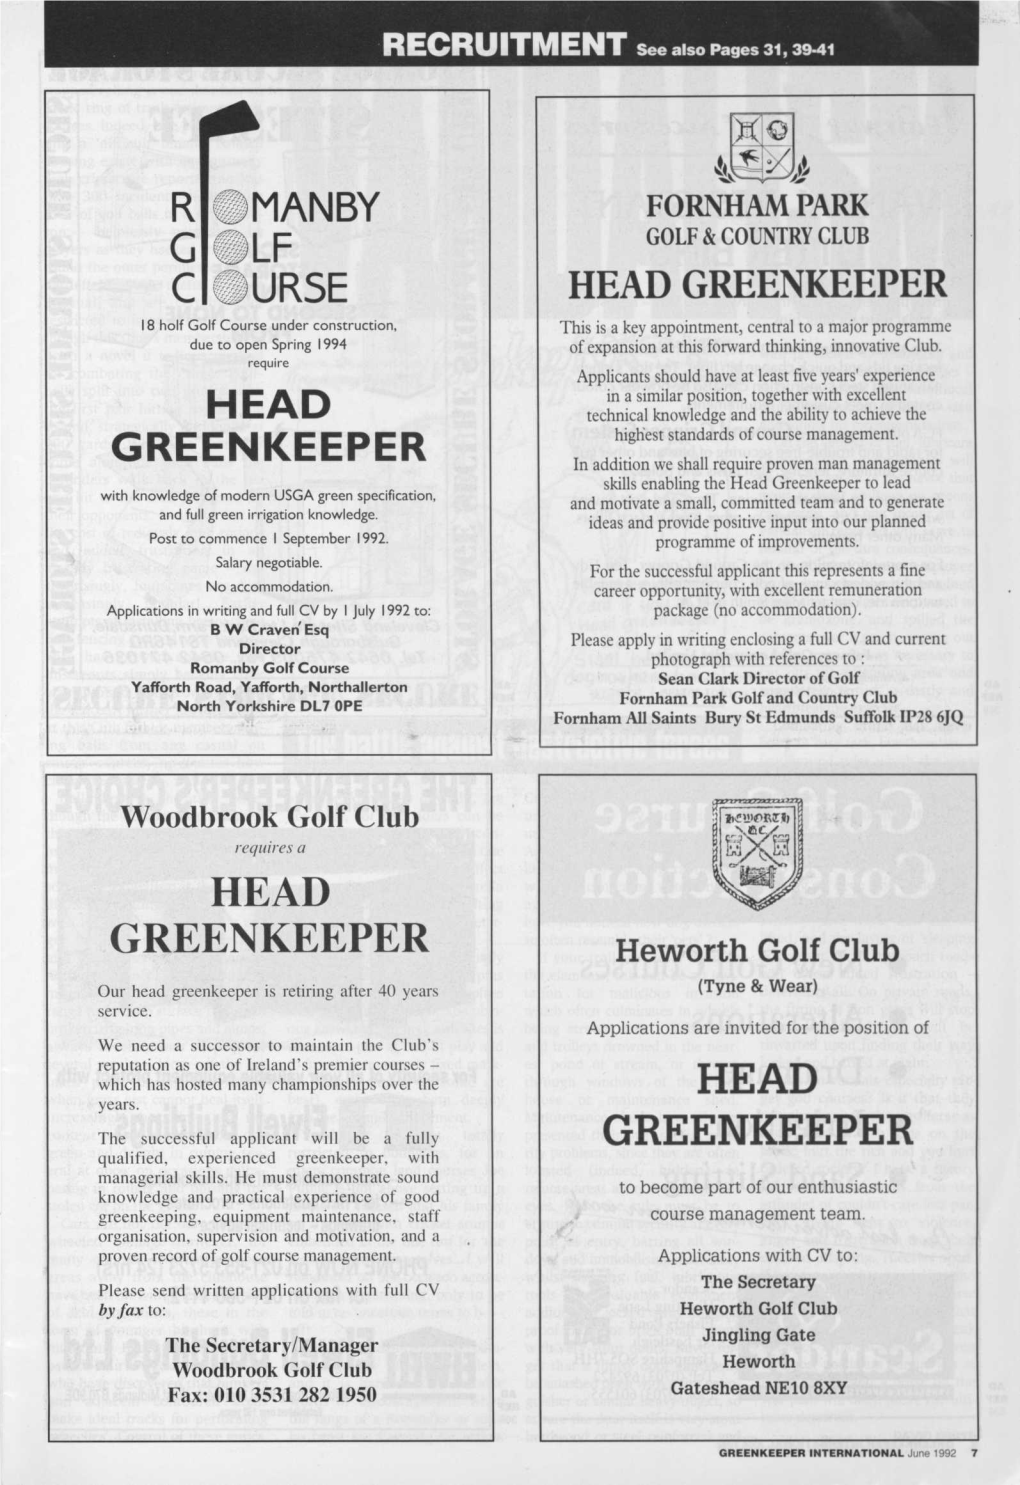 Head Greenkeeper